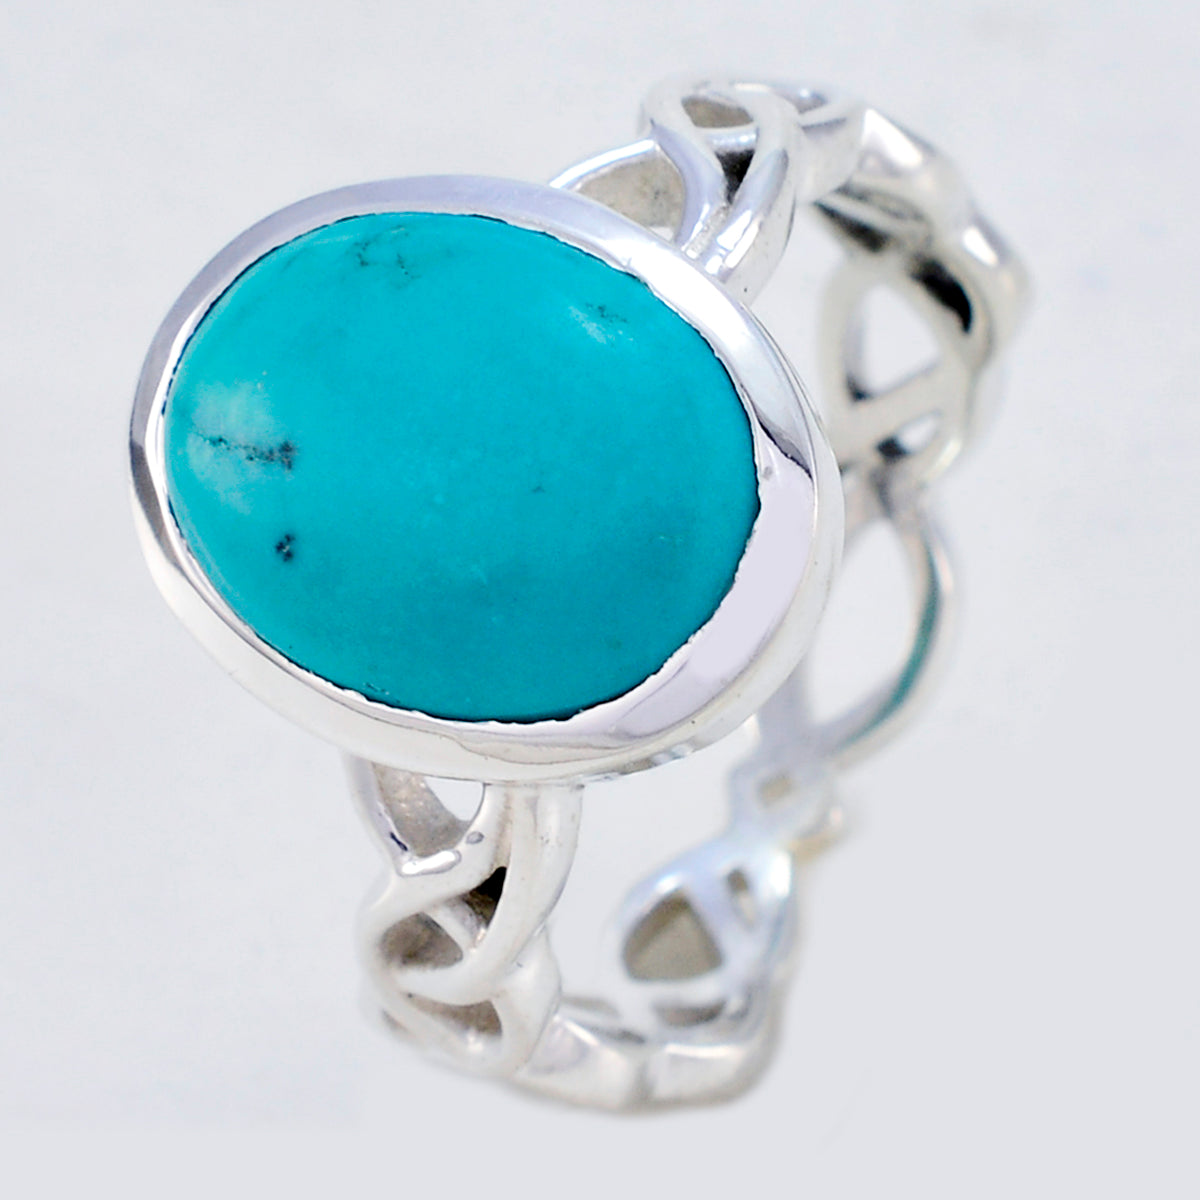 Riyo Rajasthan Stone Turquoise Solid Silver Ring Paw Print Jewelry